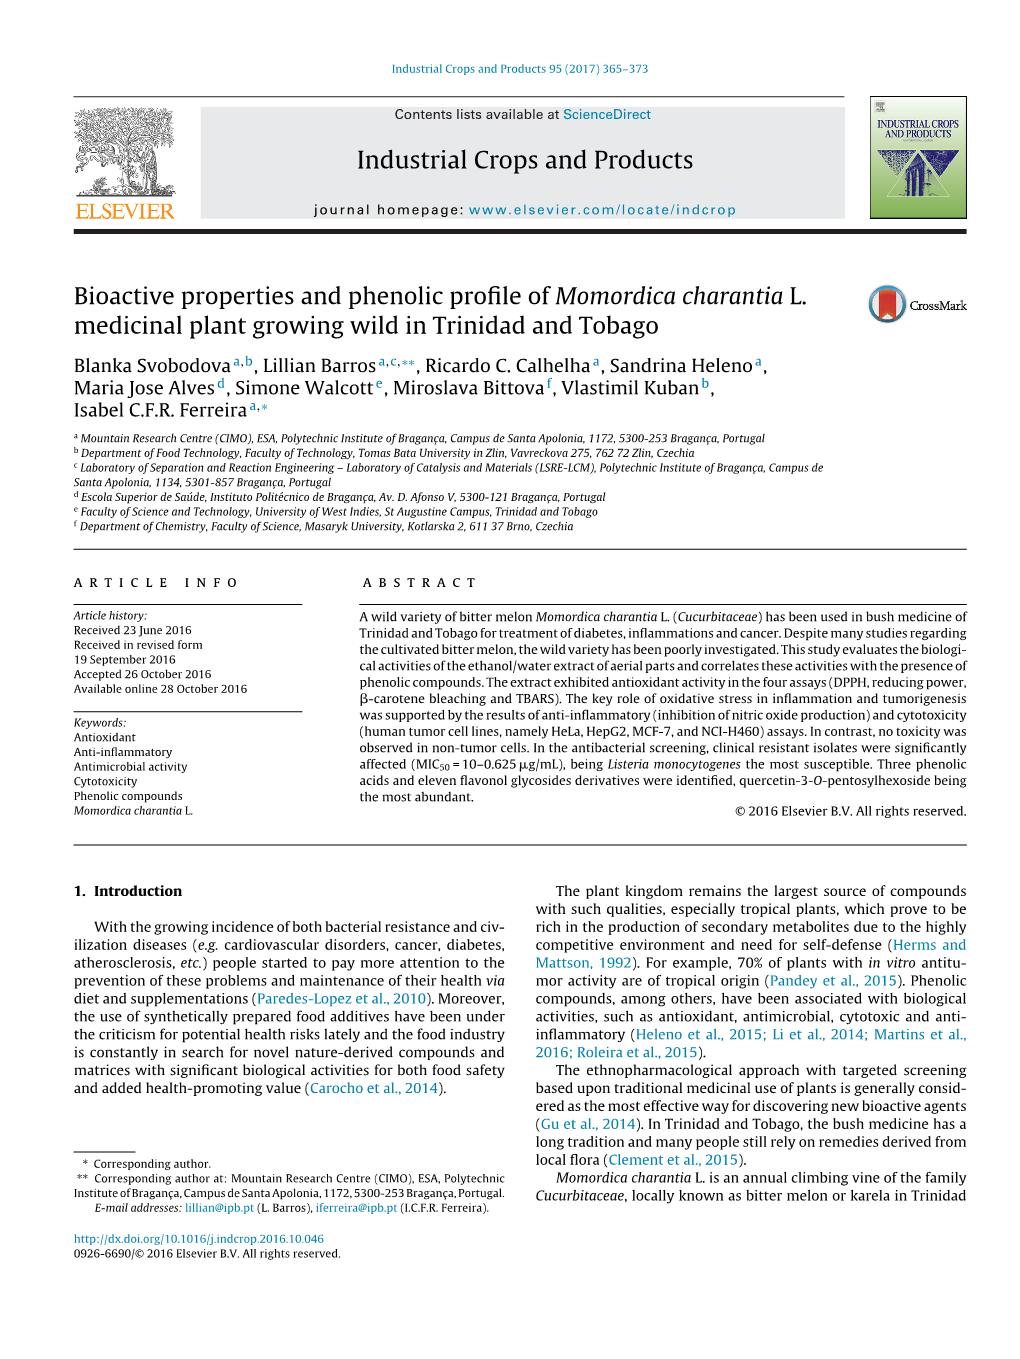 Bioactive Properties and Phenolic Profile of Momordica Charantia L